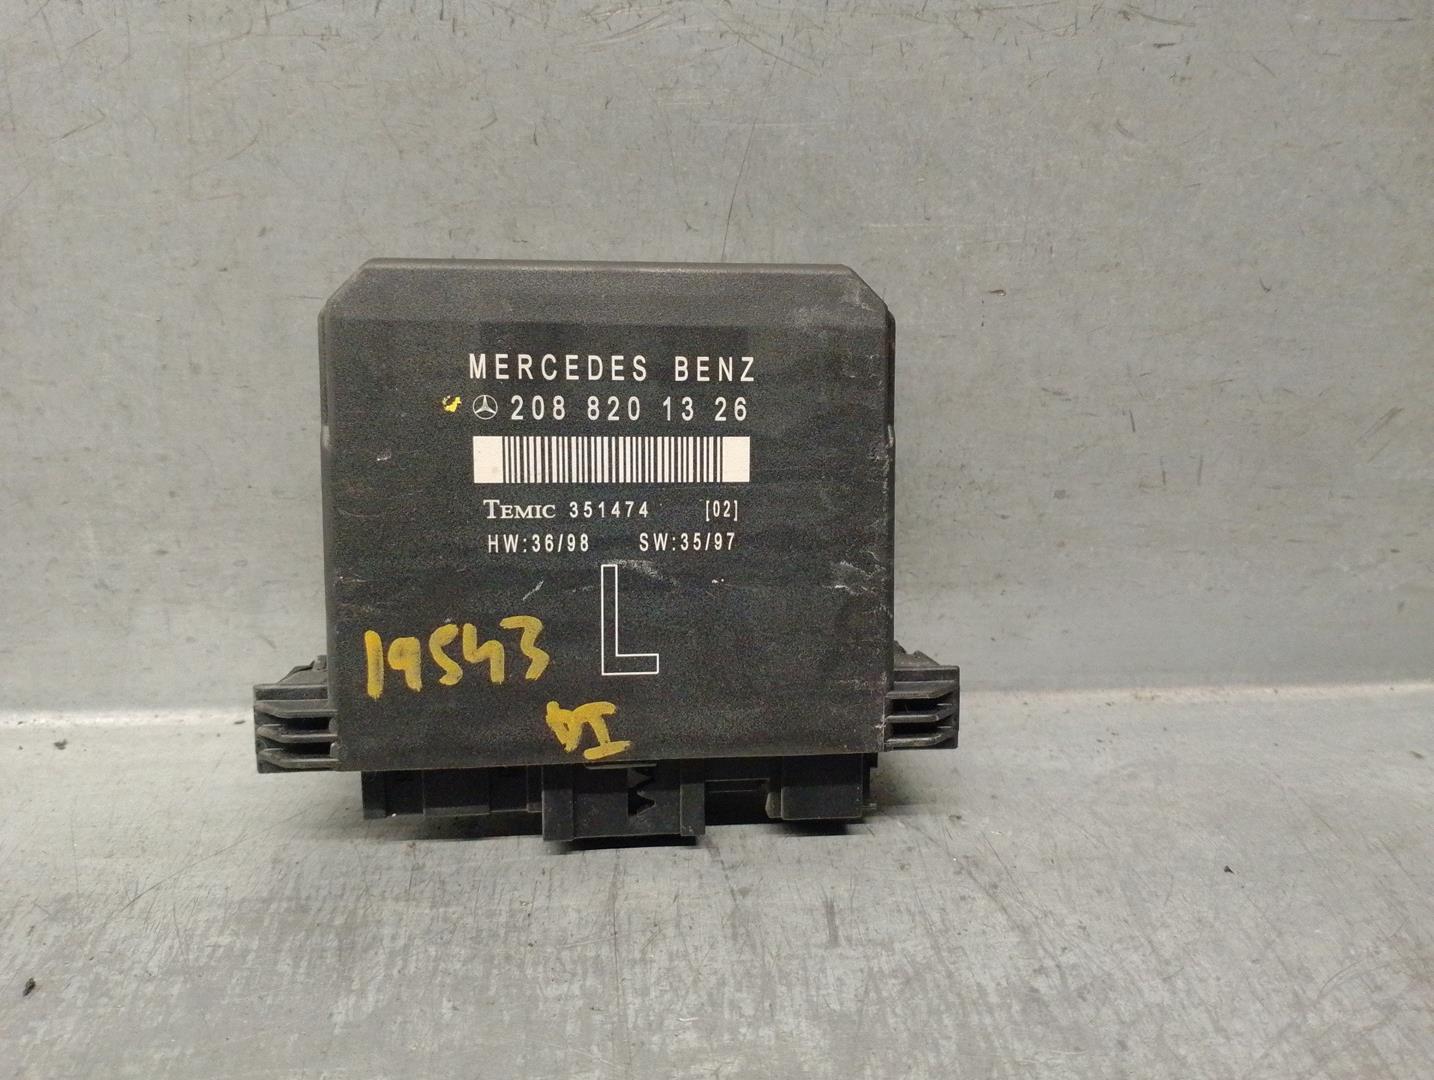 MERCEDES-BENZ C-Class W202/S202 (1993-2001) Другие блоки управления 2088201326, 351474, TEMIC 22780829